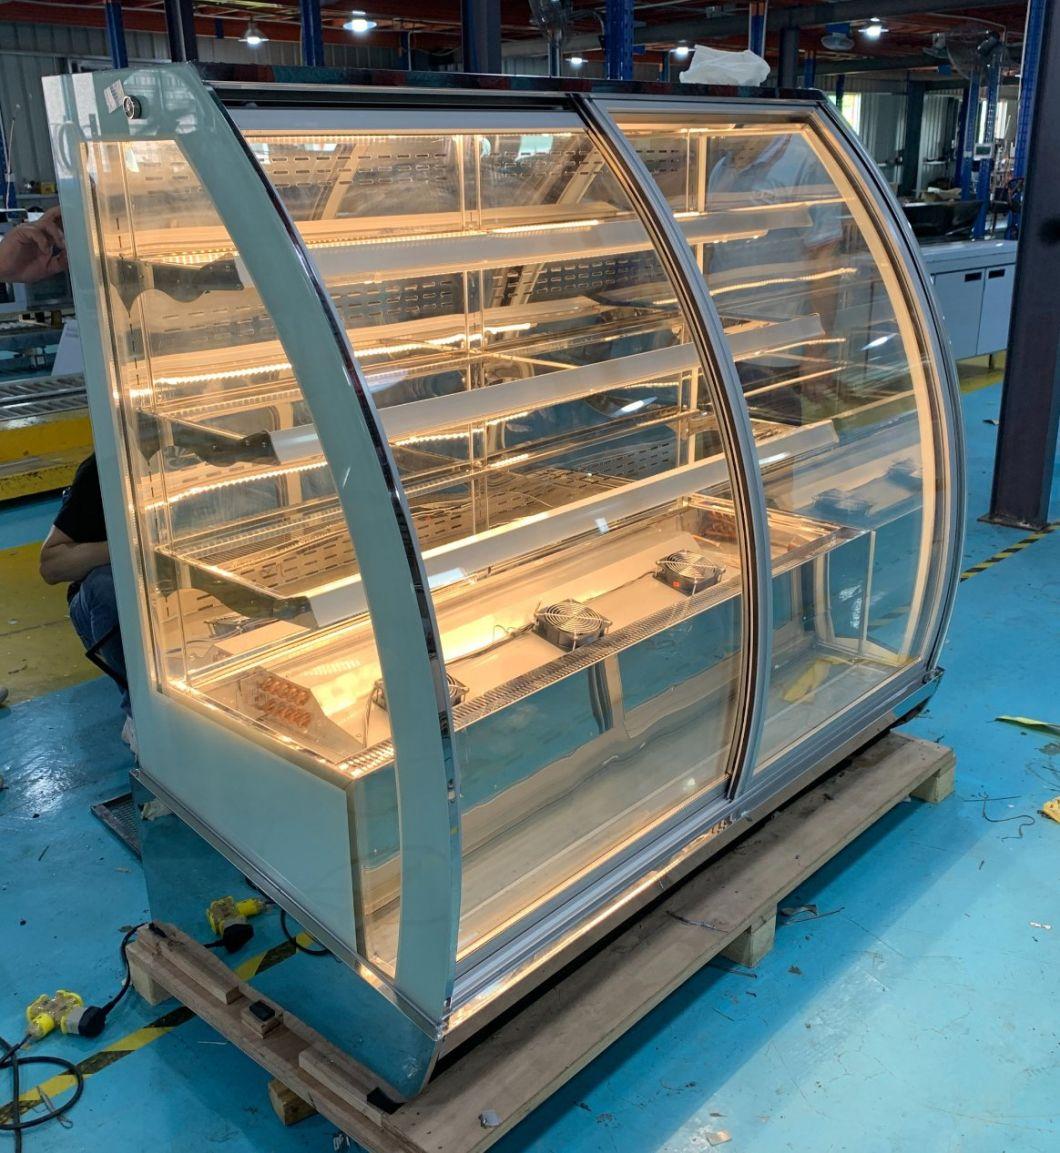 Floor Standing Curve Glass Door Bakery Bread Cake Cooler Refrigerated Positive Temperature Showcase Cooler